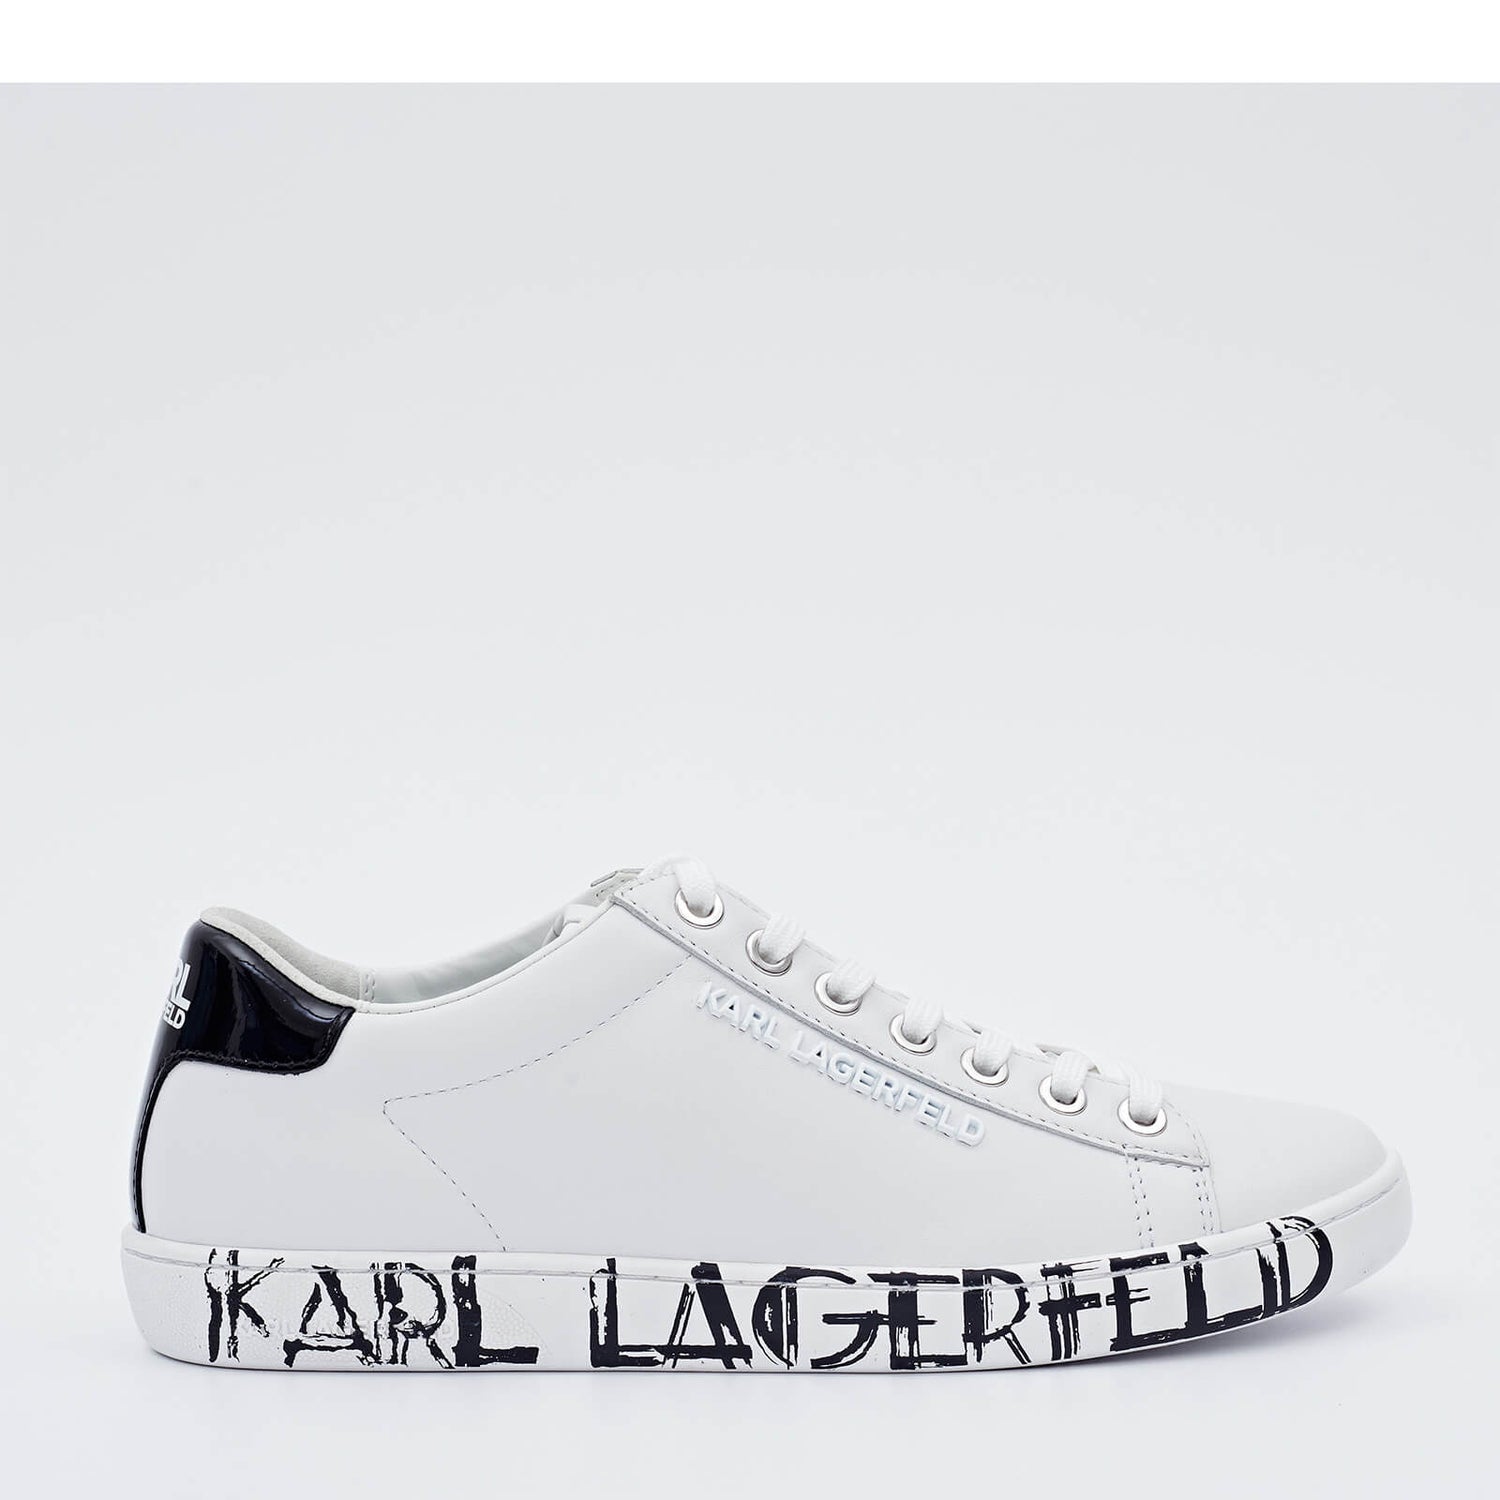 KARL LAGERFELD Women's Kupsole II Art Deco Leather Trainers - White